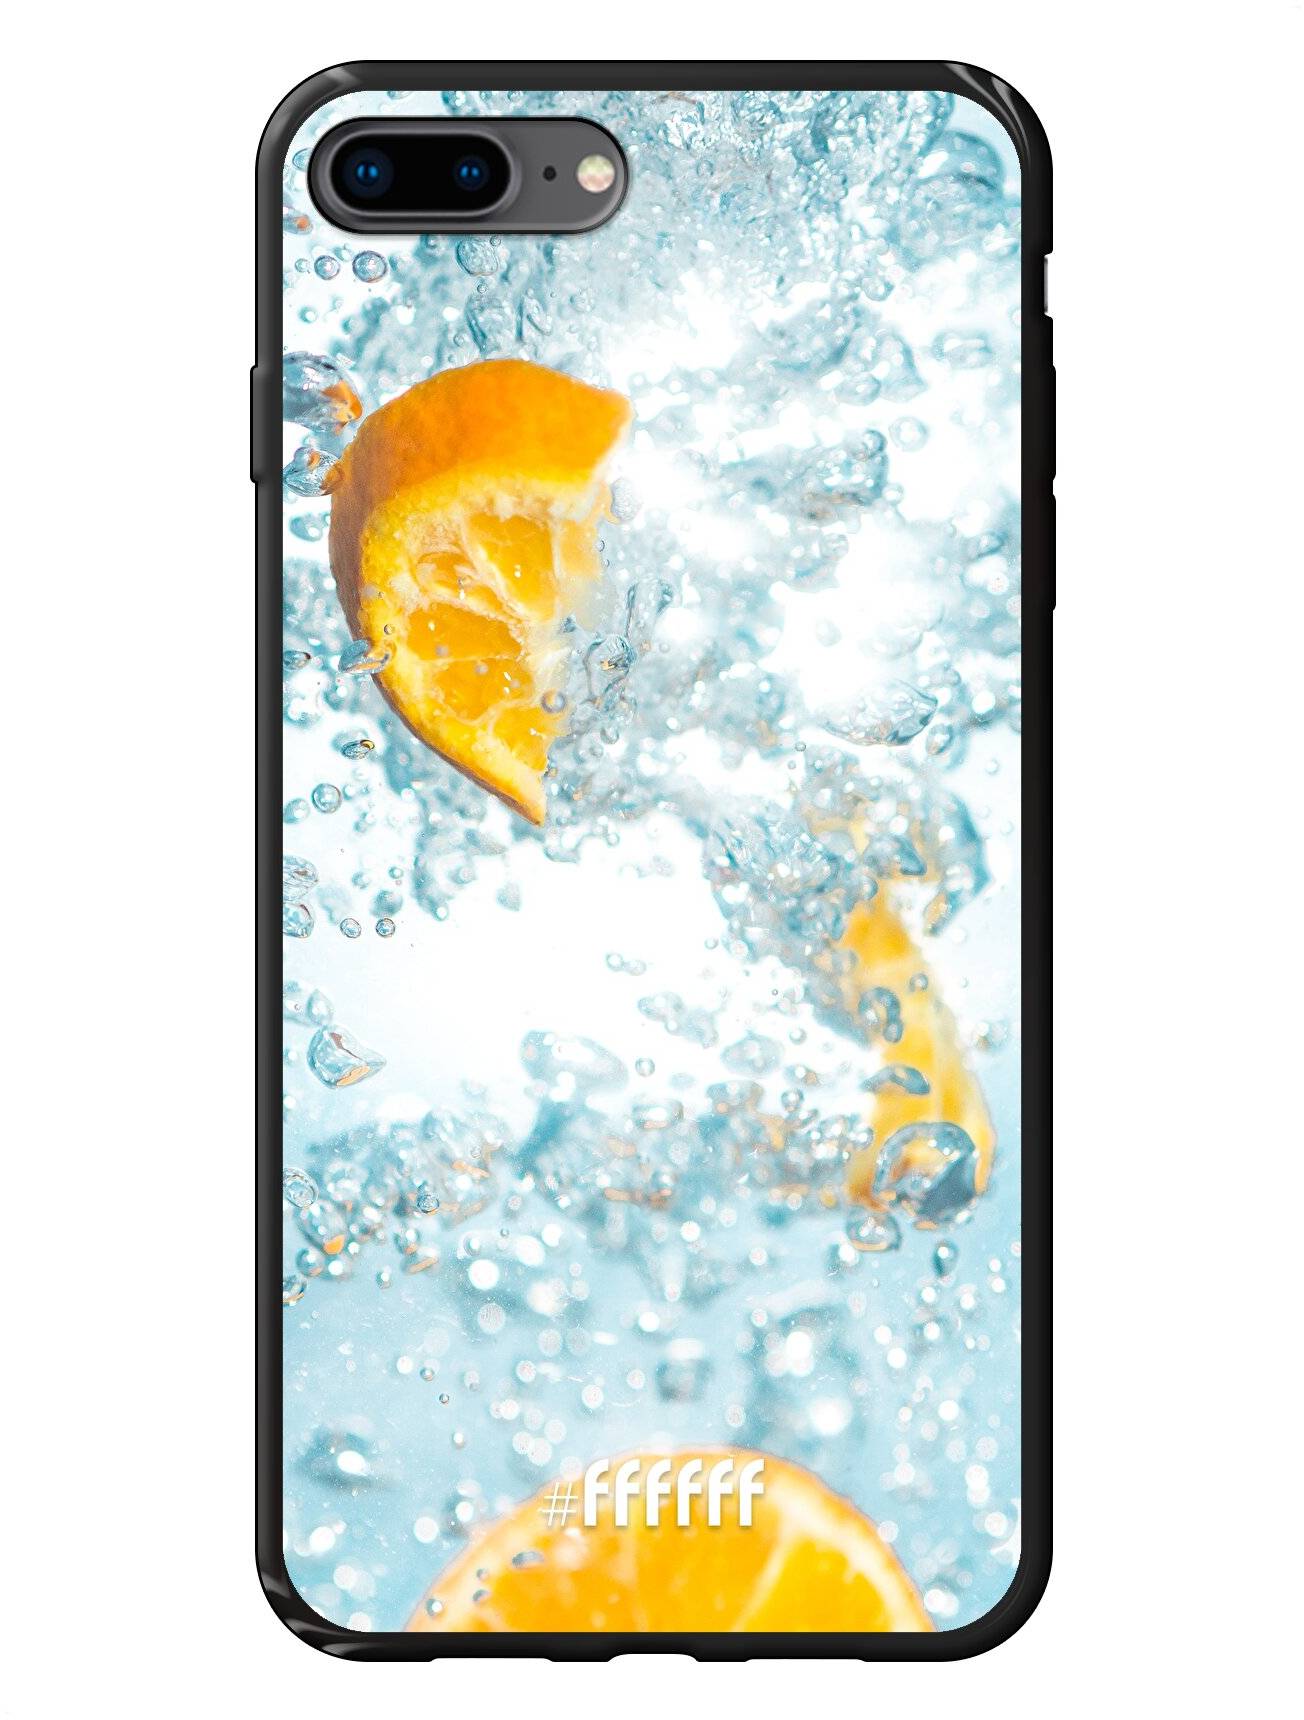 Lemon Fresh iPhone 7 Plus